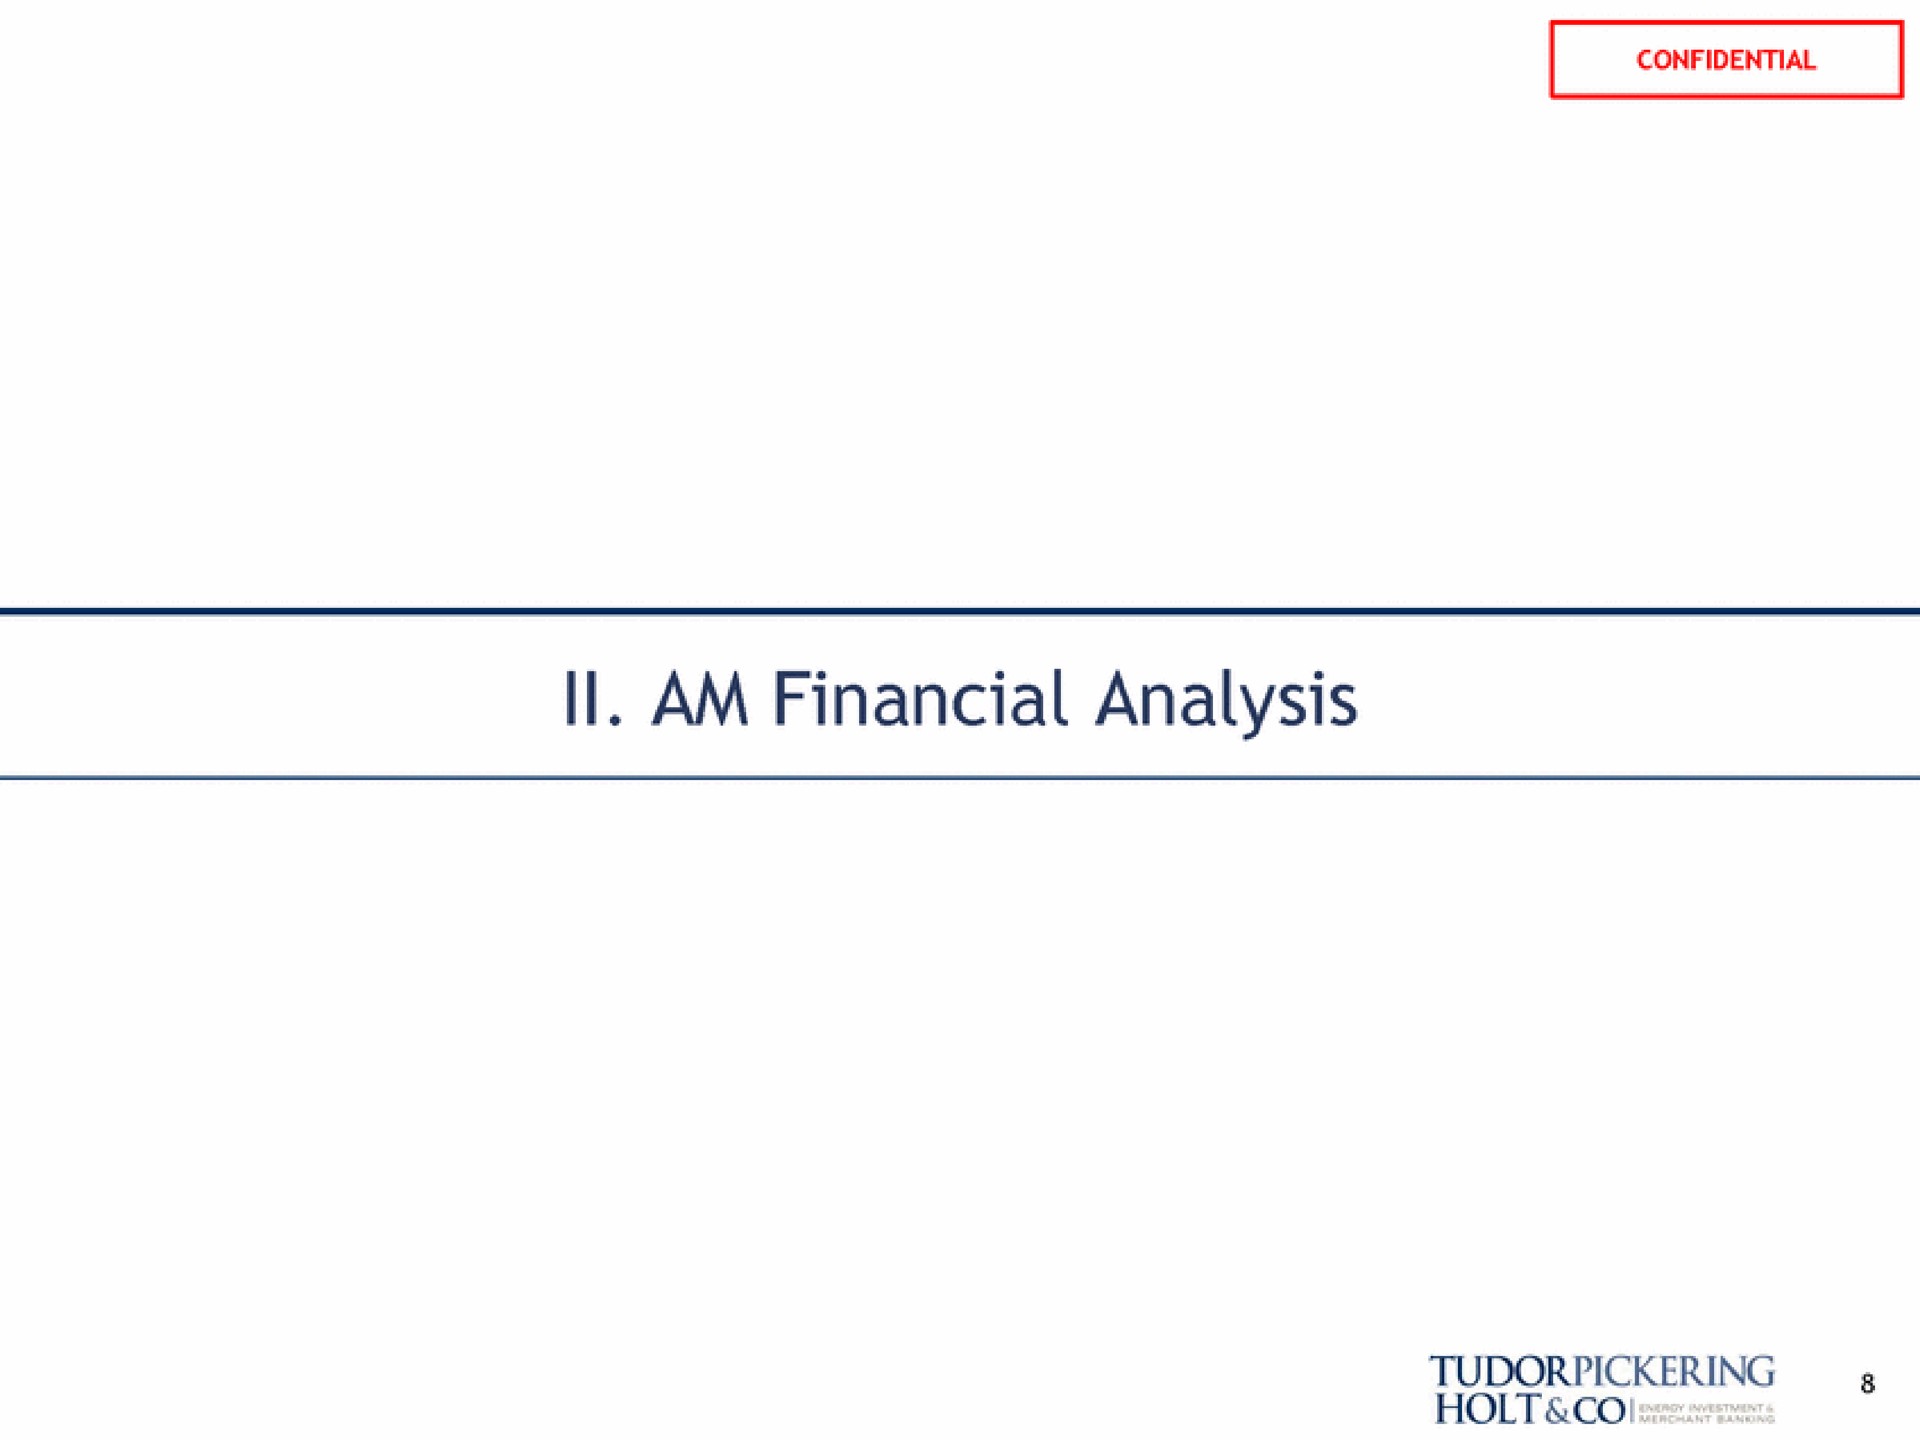 am financial analysis | Tudor, Pickering, Holt & Co